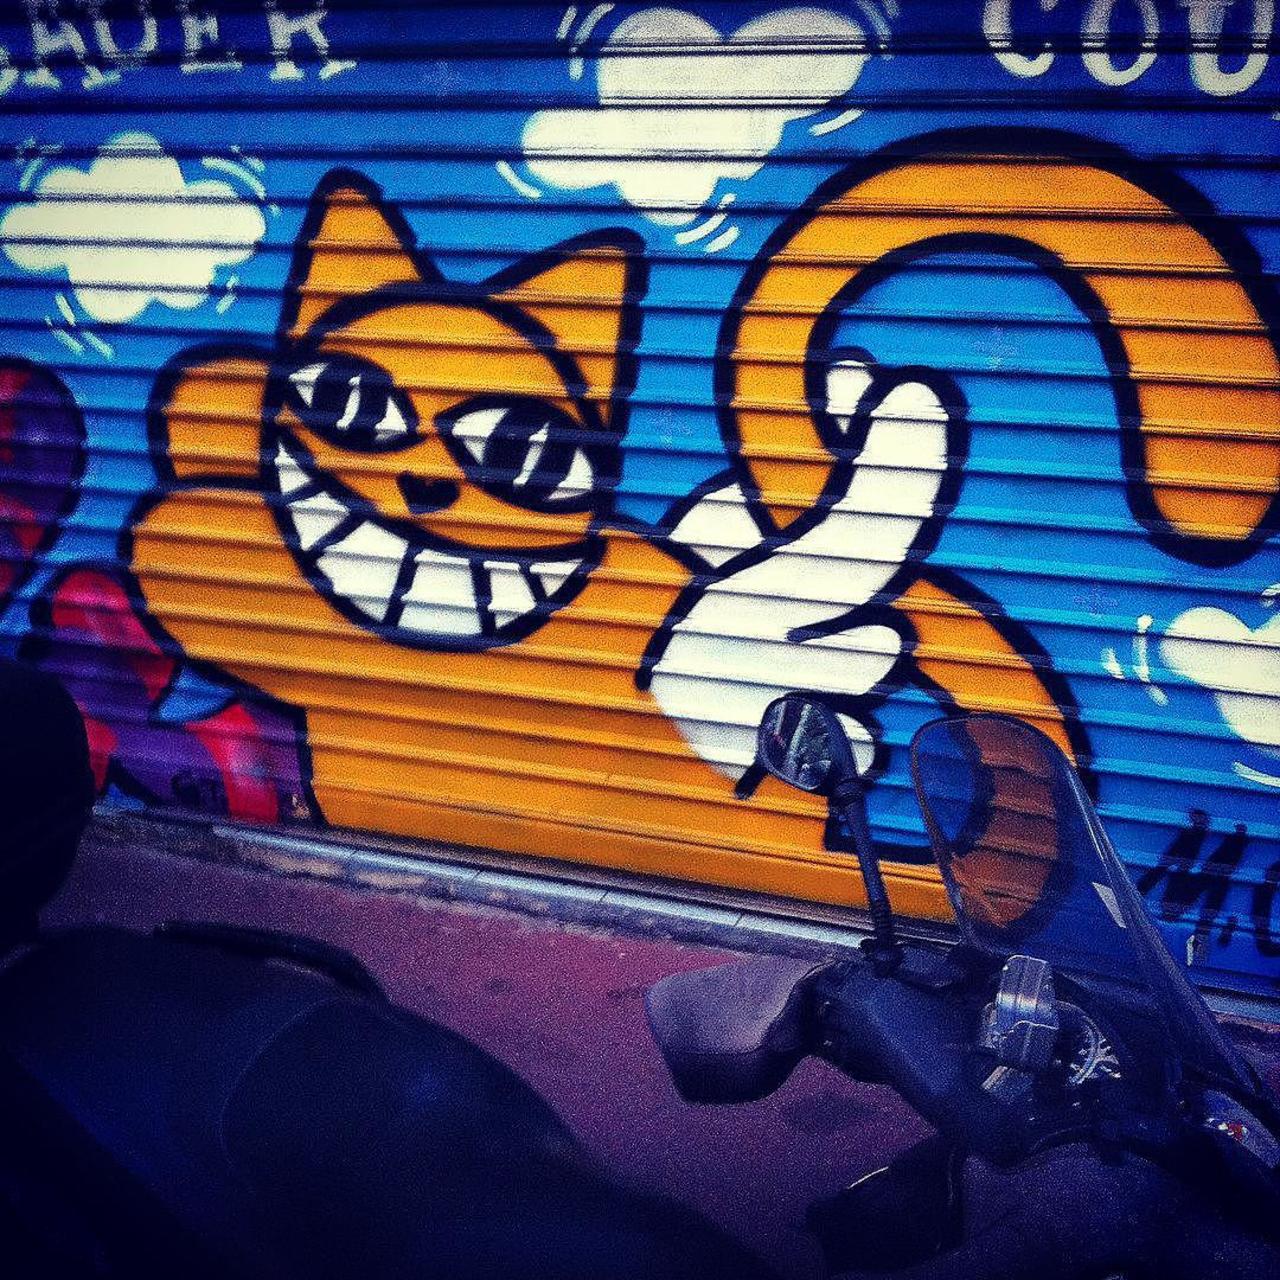 circumjacent_fr: #Paris #graffiti photo by anne__sofy http://ift.tt/1P5tlUI #StreetArt http://t.co/qeUIU8OufZ